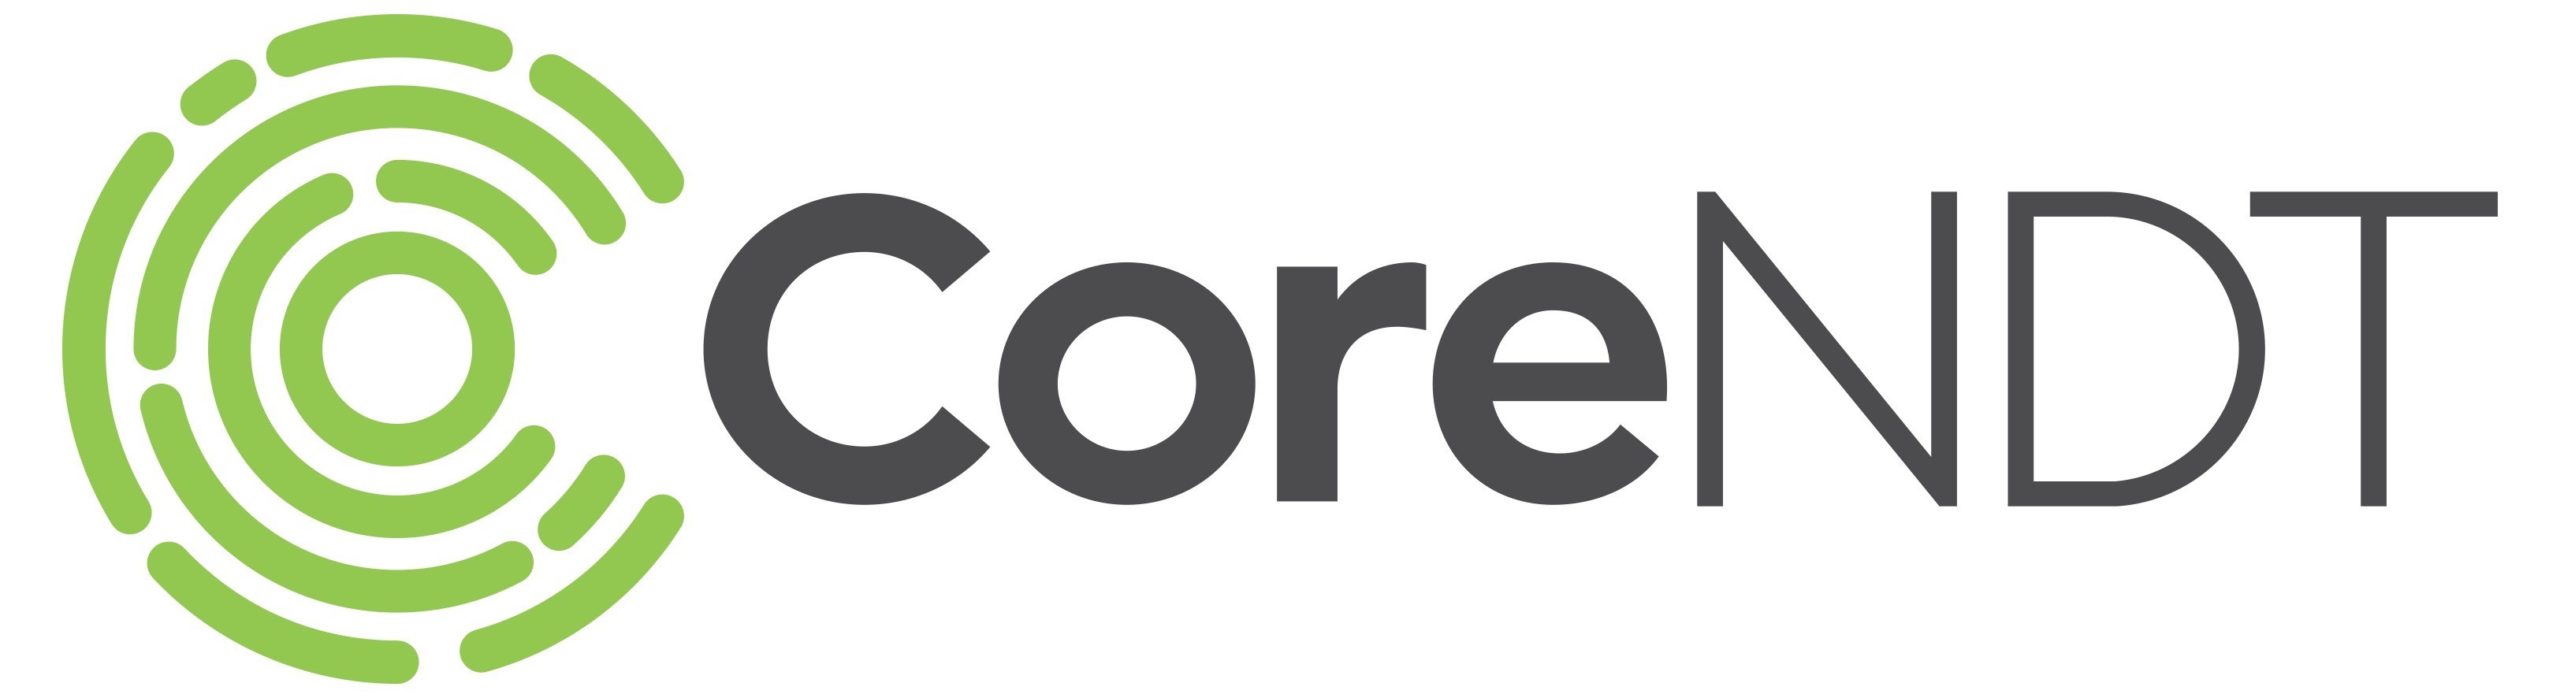 corendt logo long